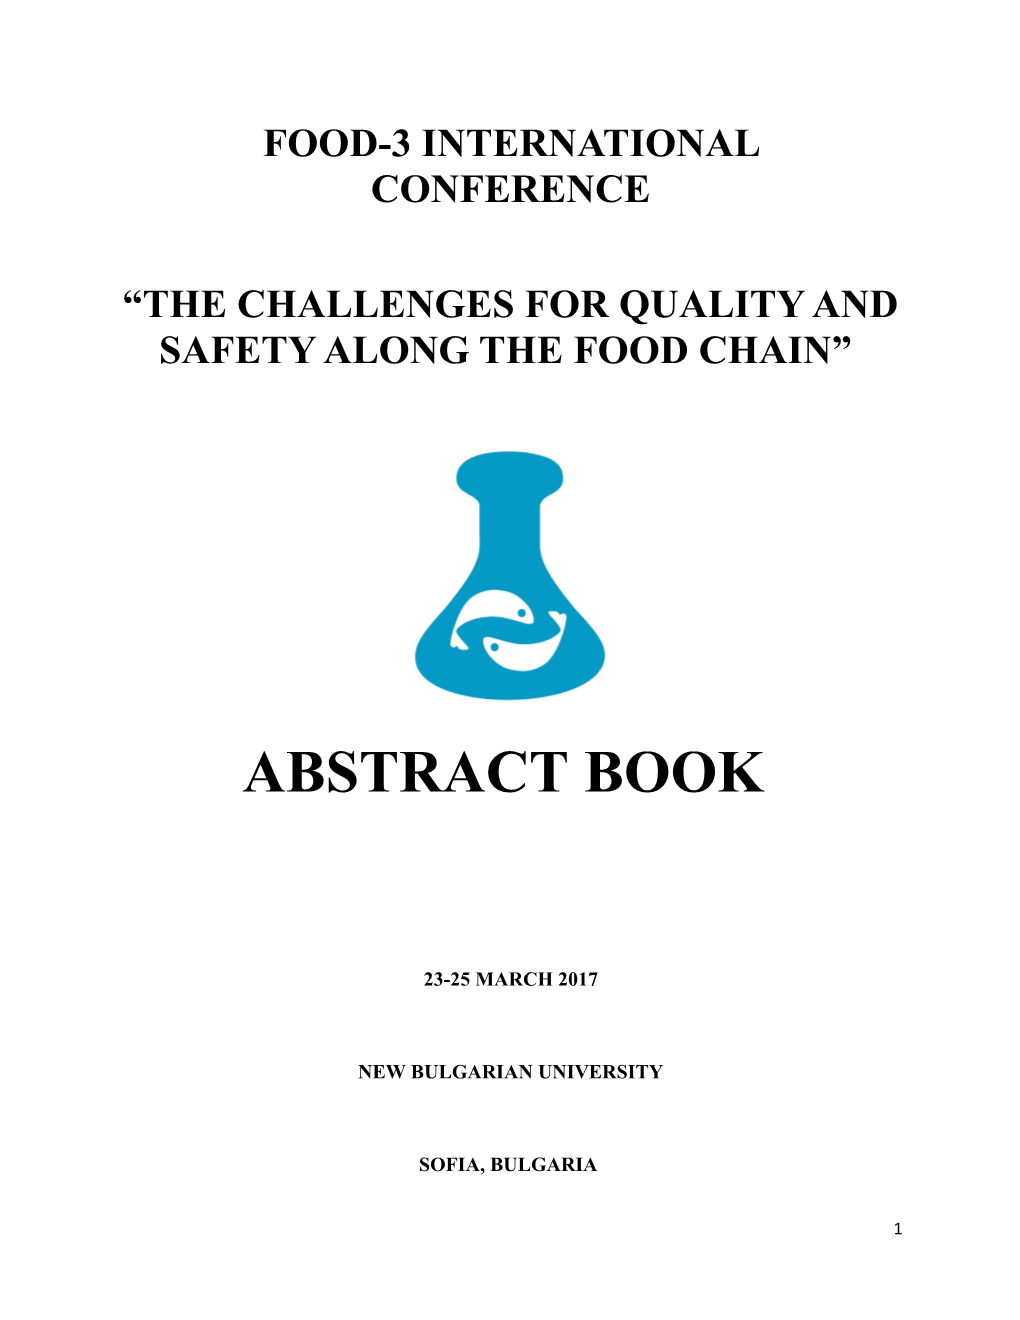 Food-3 International Conference